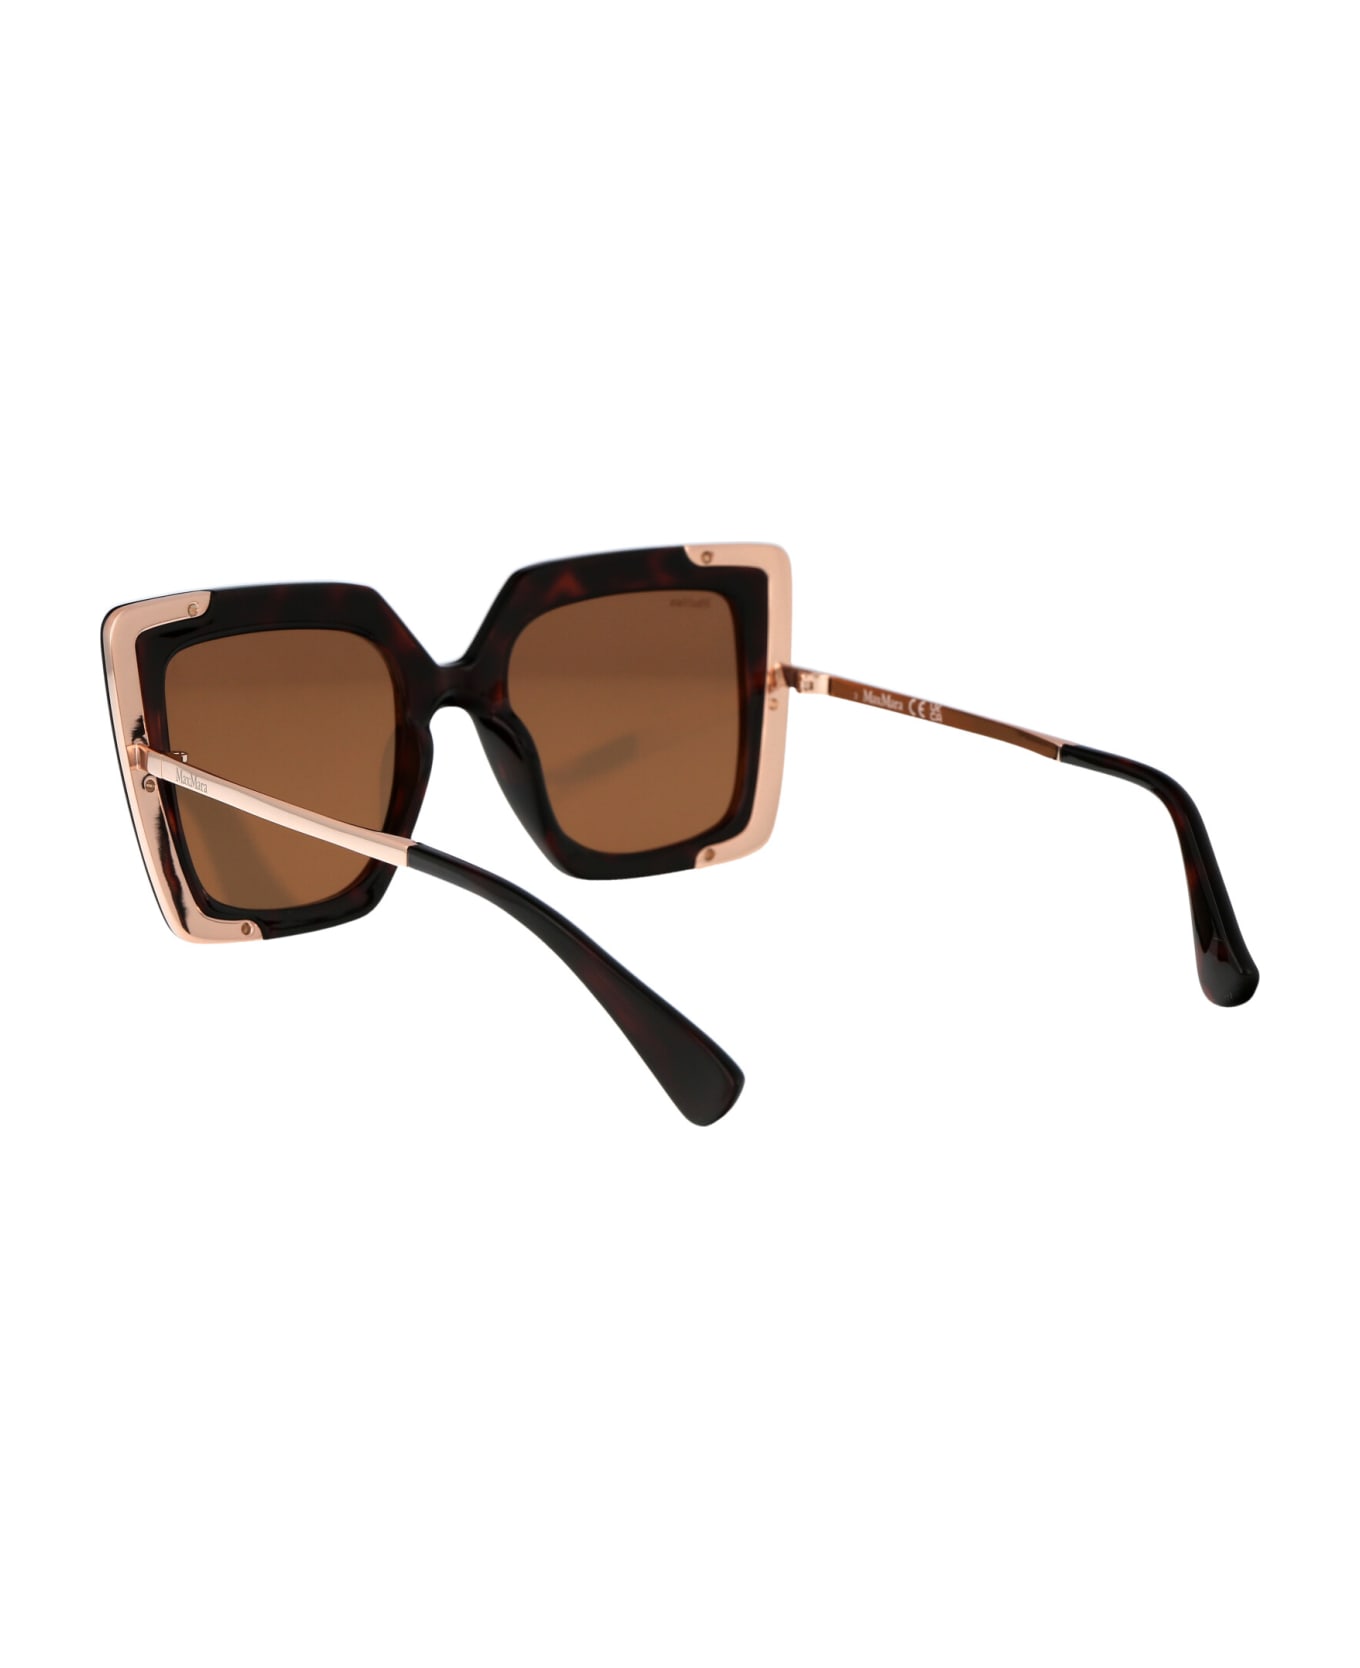 Max Mara Design4 Sunglasses - 54S Avana Rossa/Bordeaux